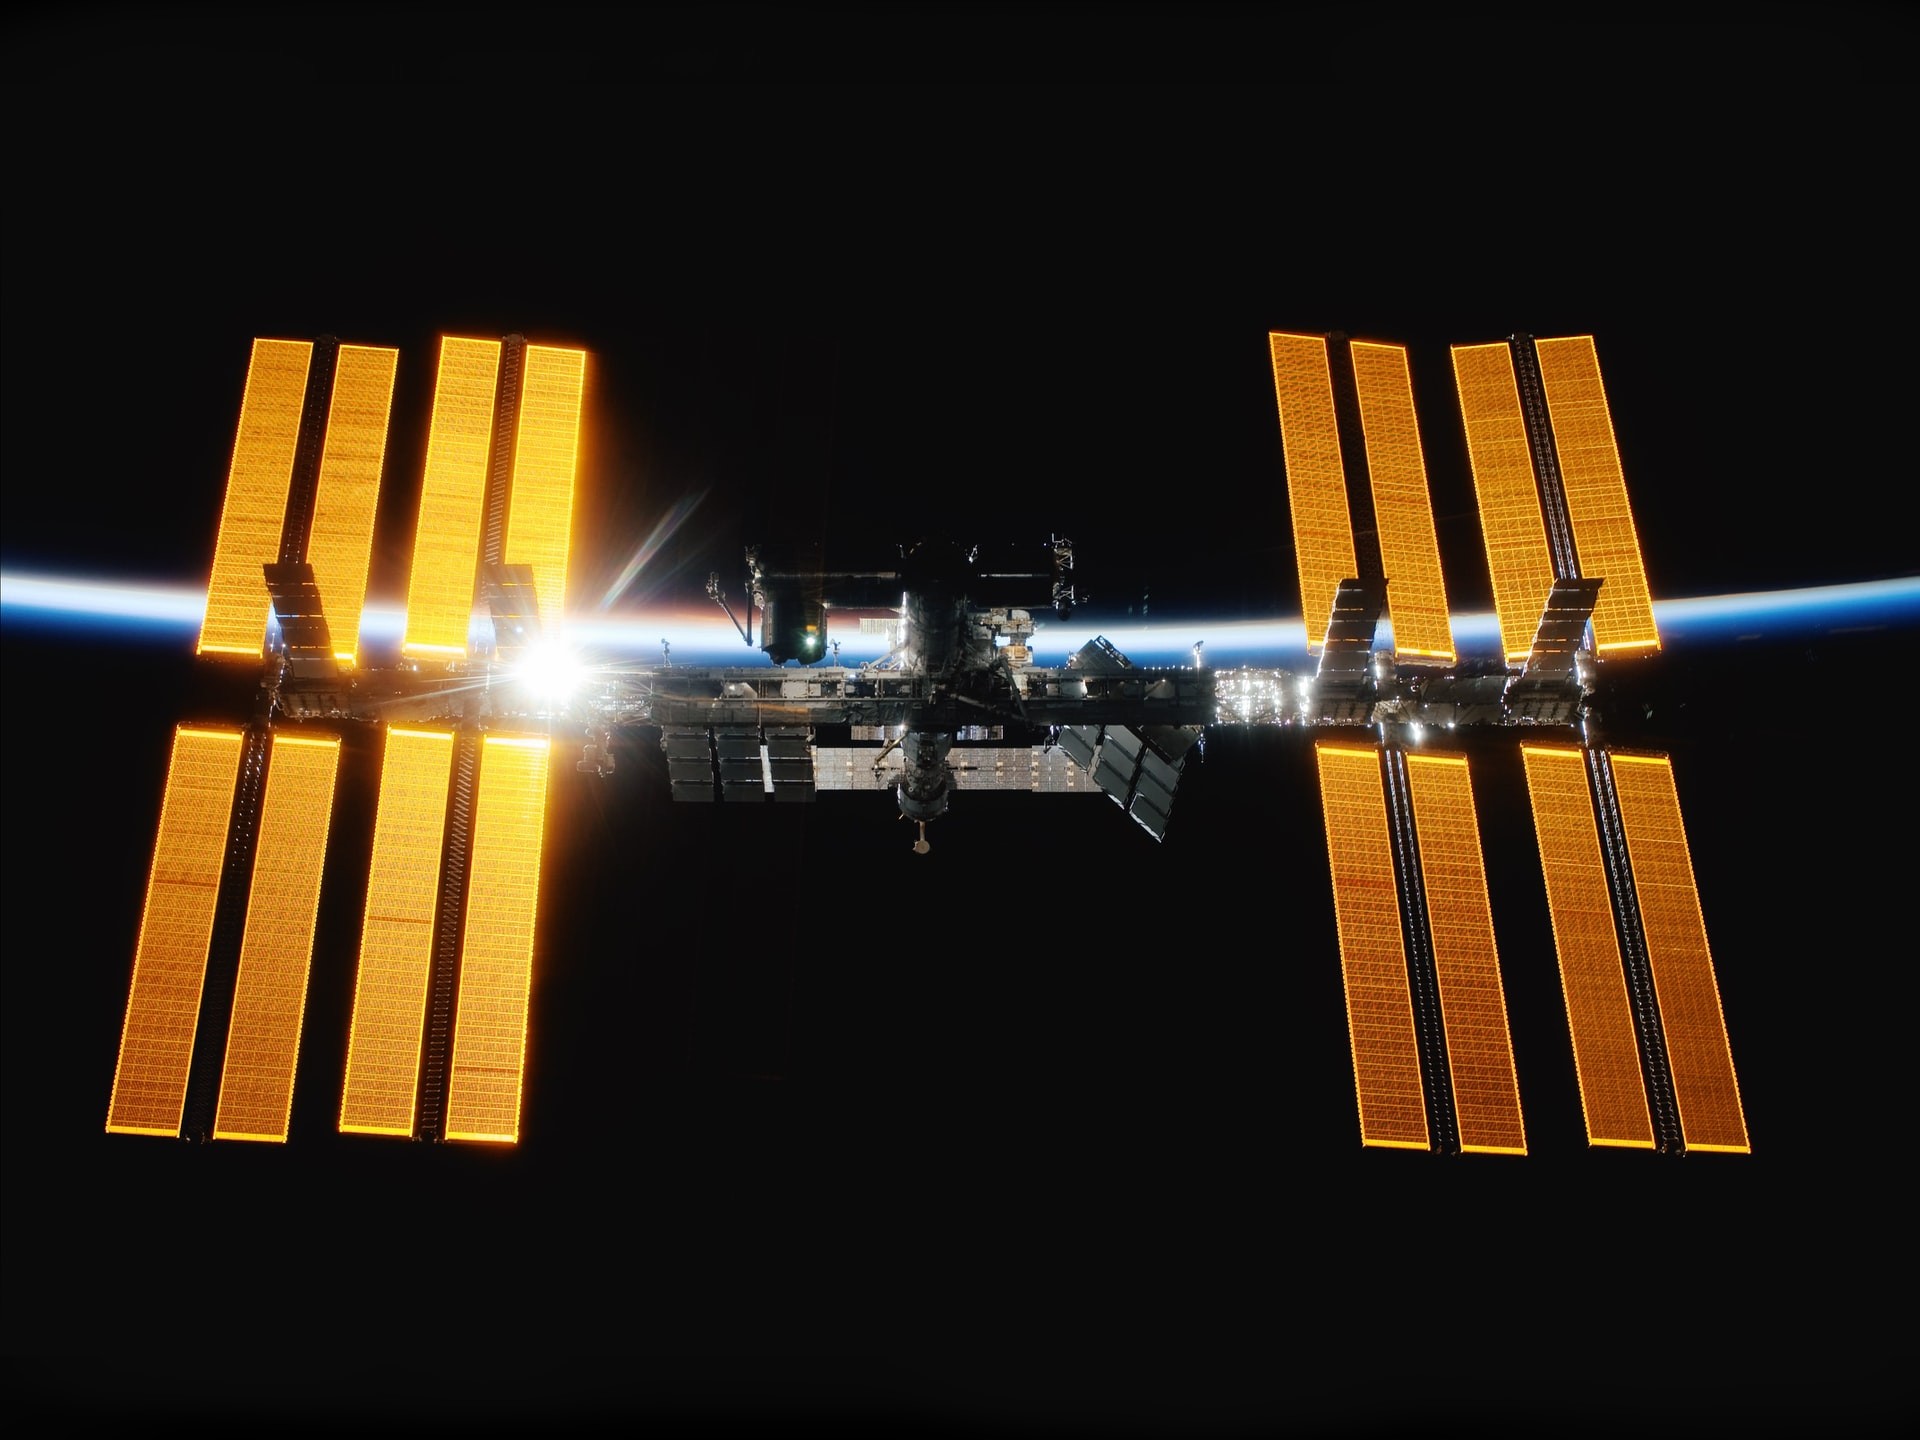 Take a virtual tour to the international space station.